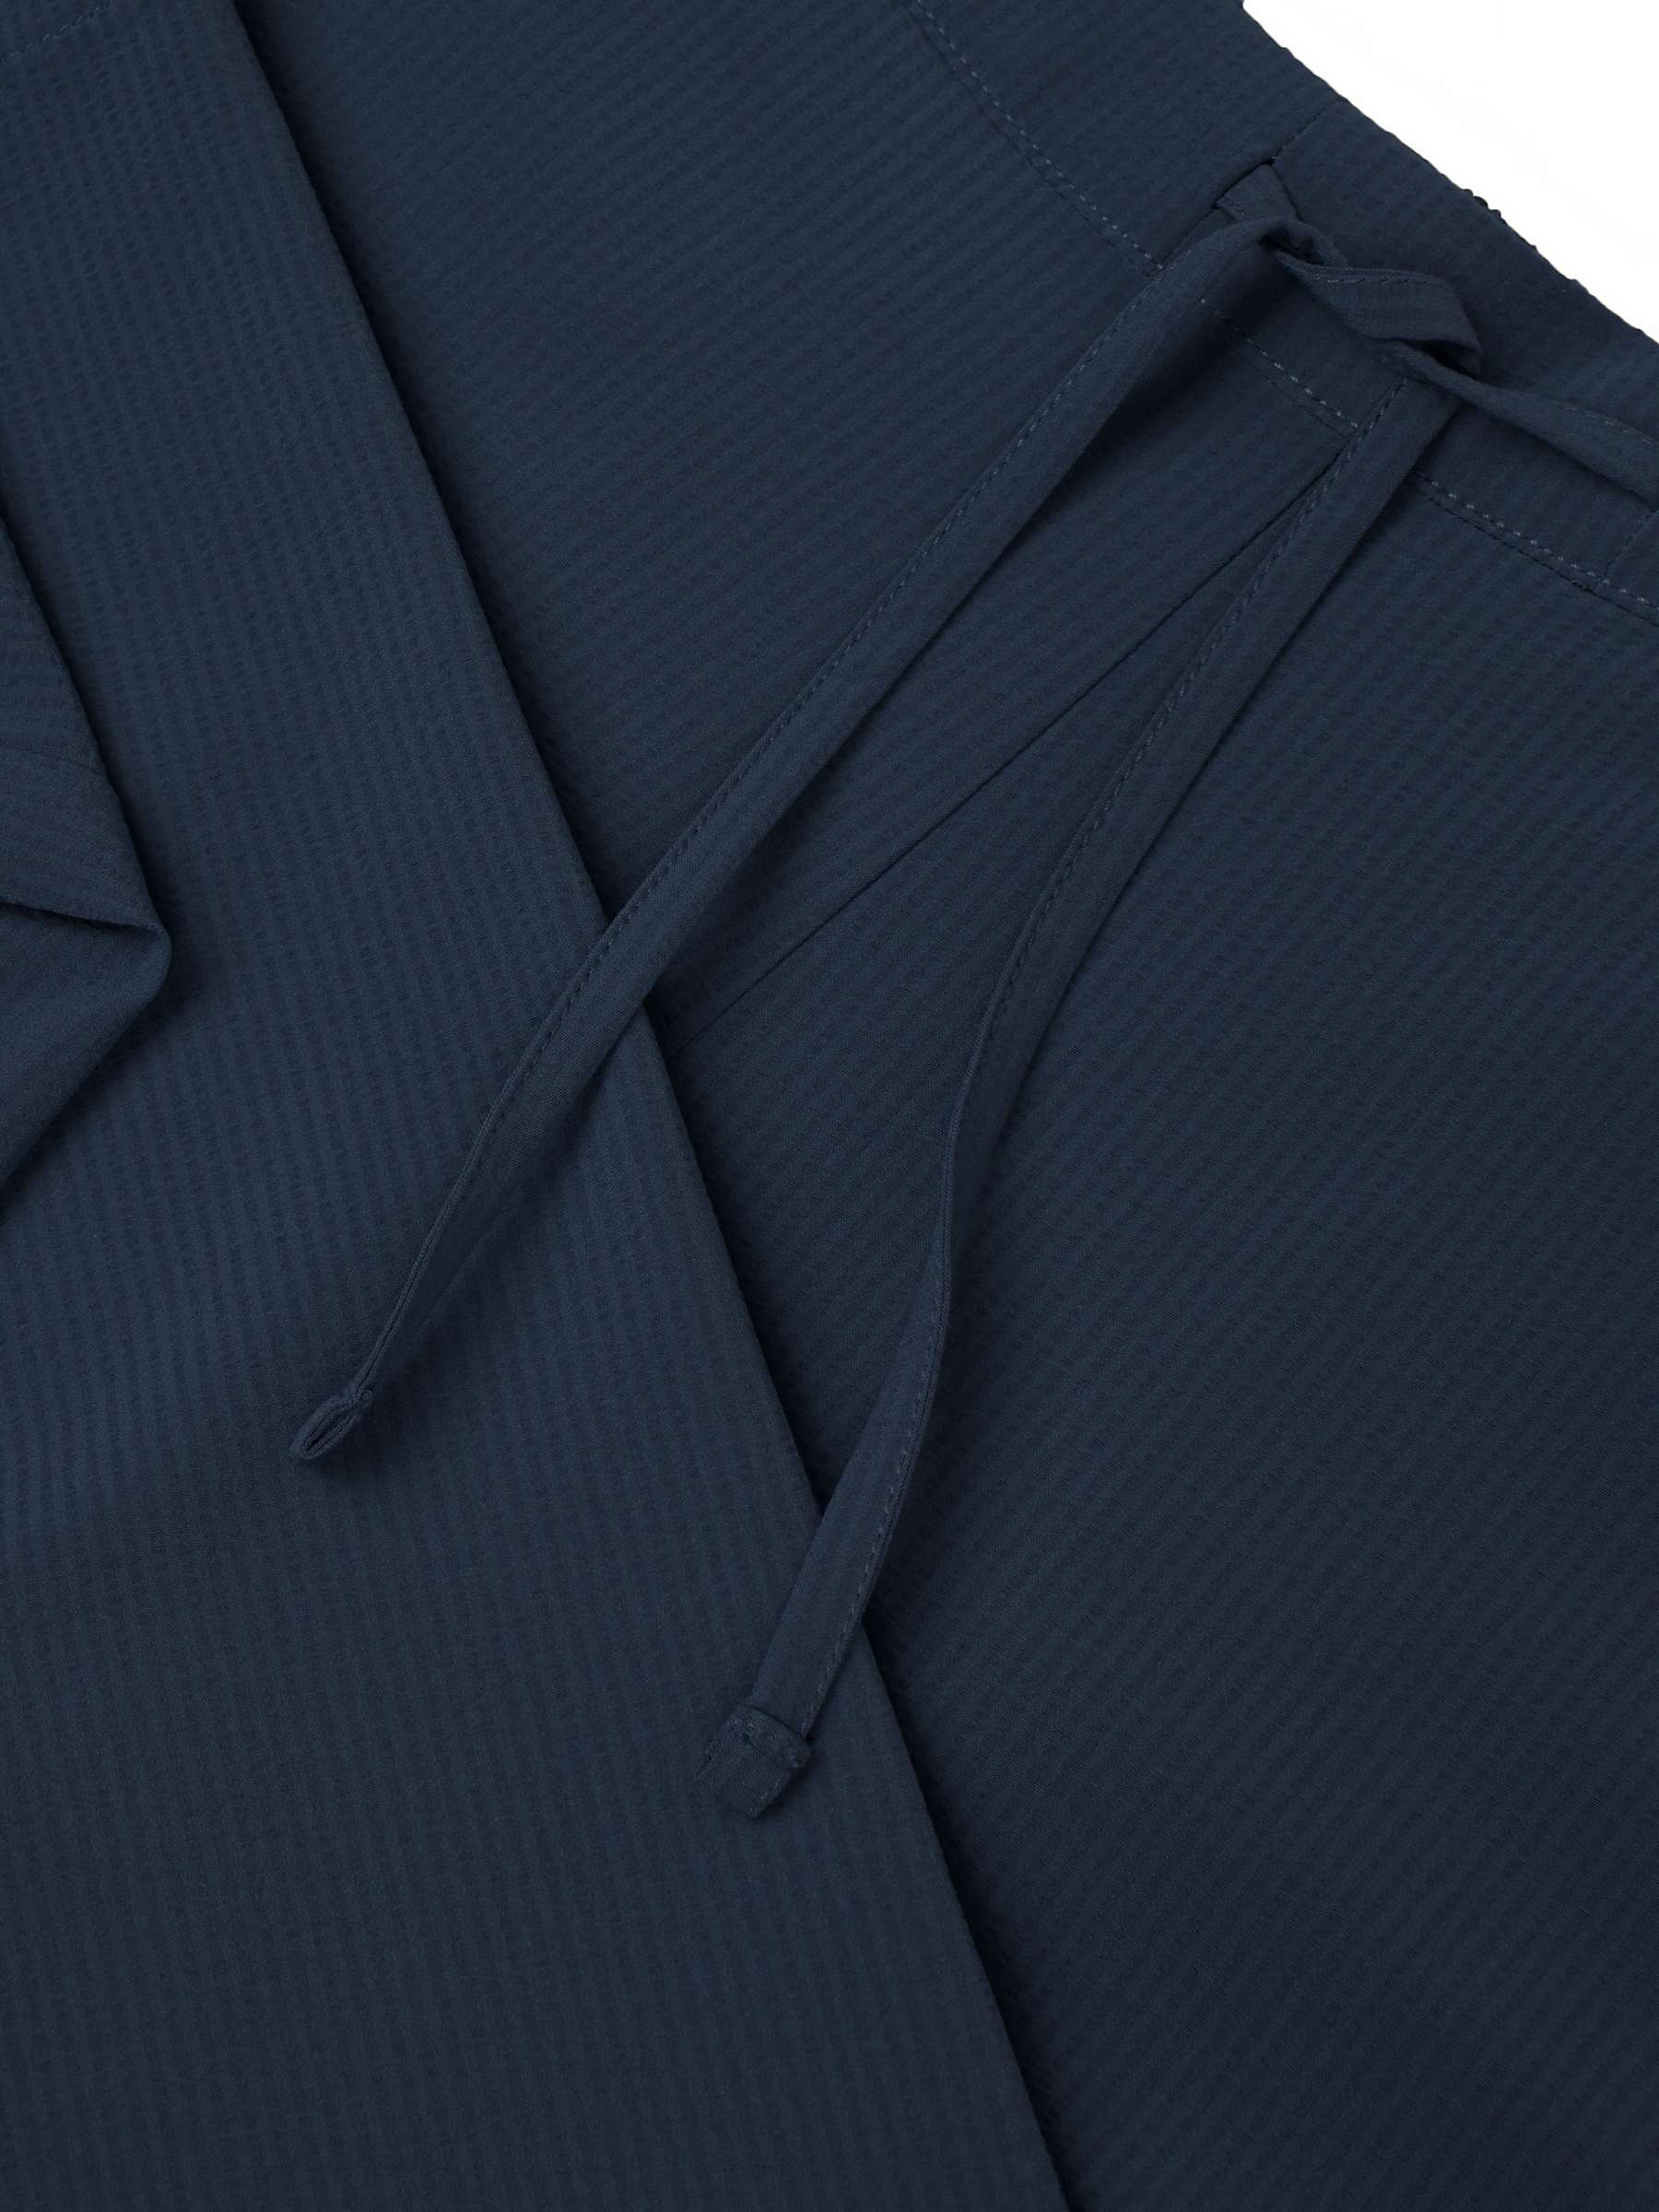 Buy Rohan Azul Lightweight Travel Trousers, True Navy Online at johnlewis.com